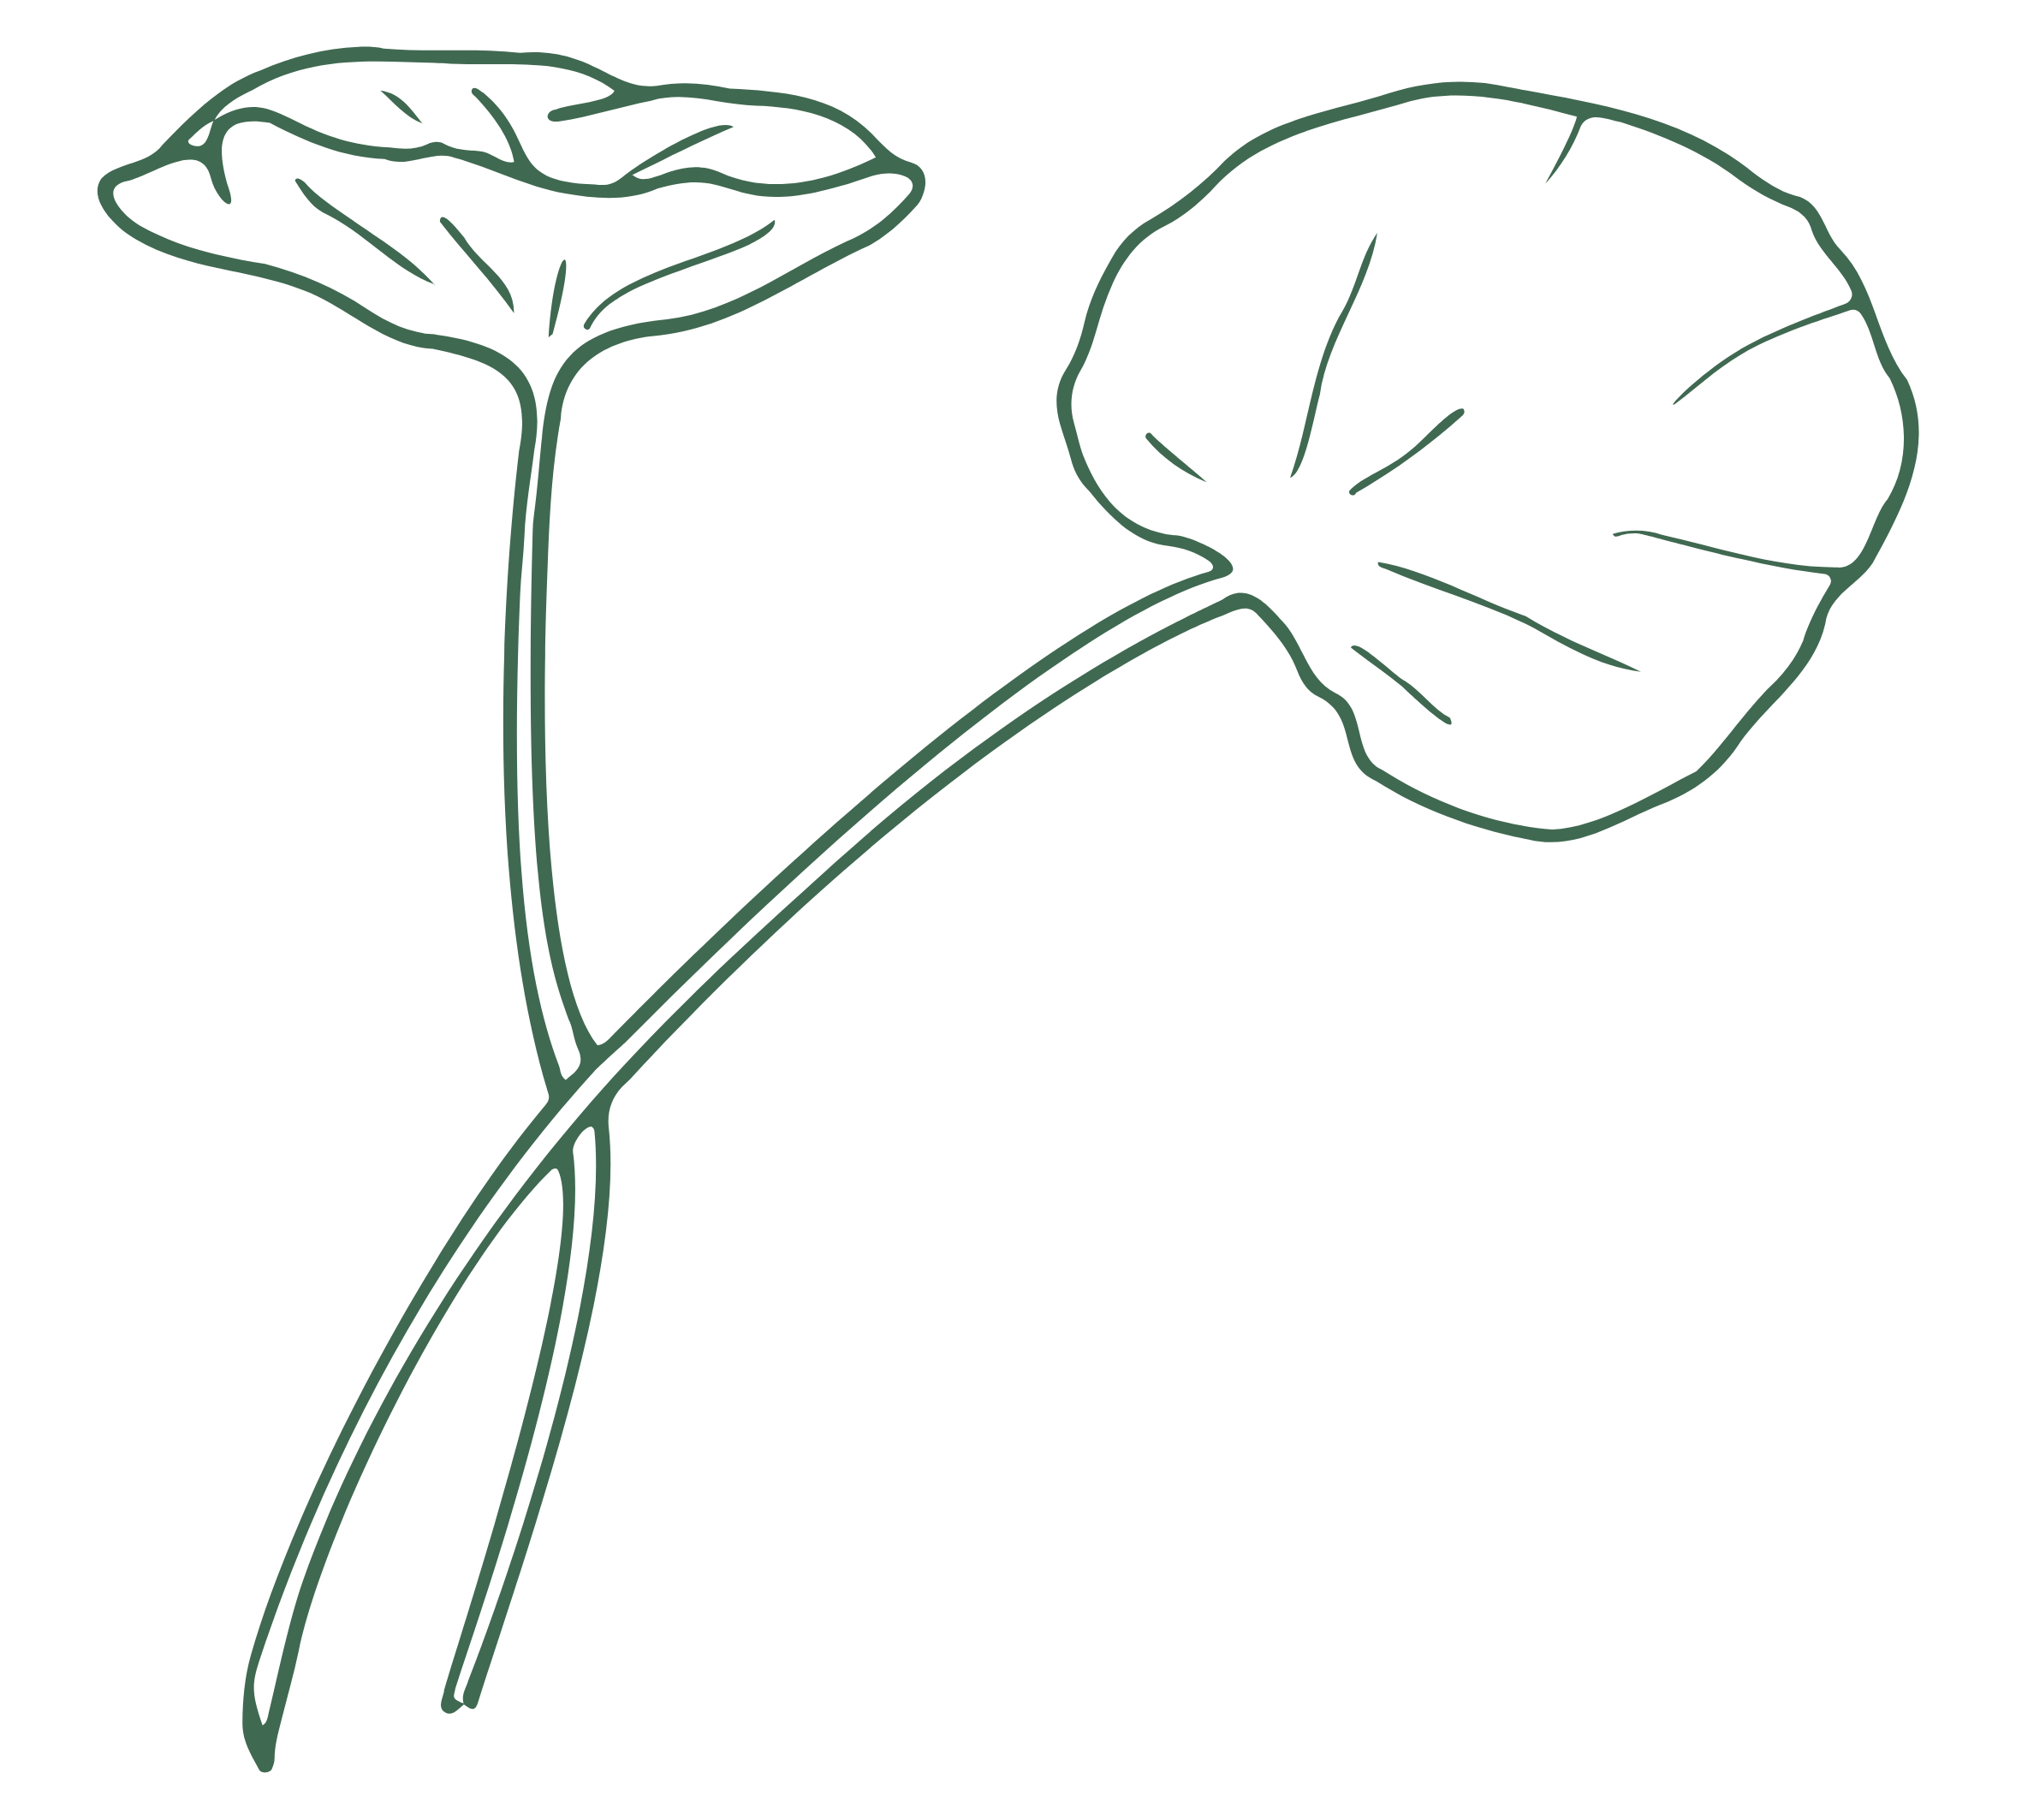 Centella asiatica leaves.